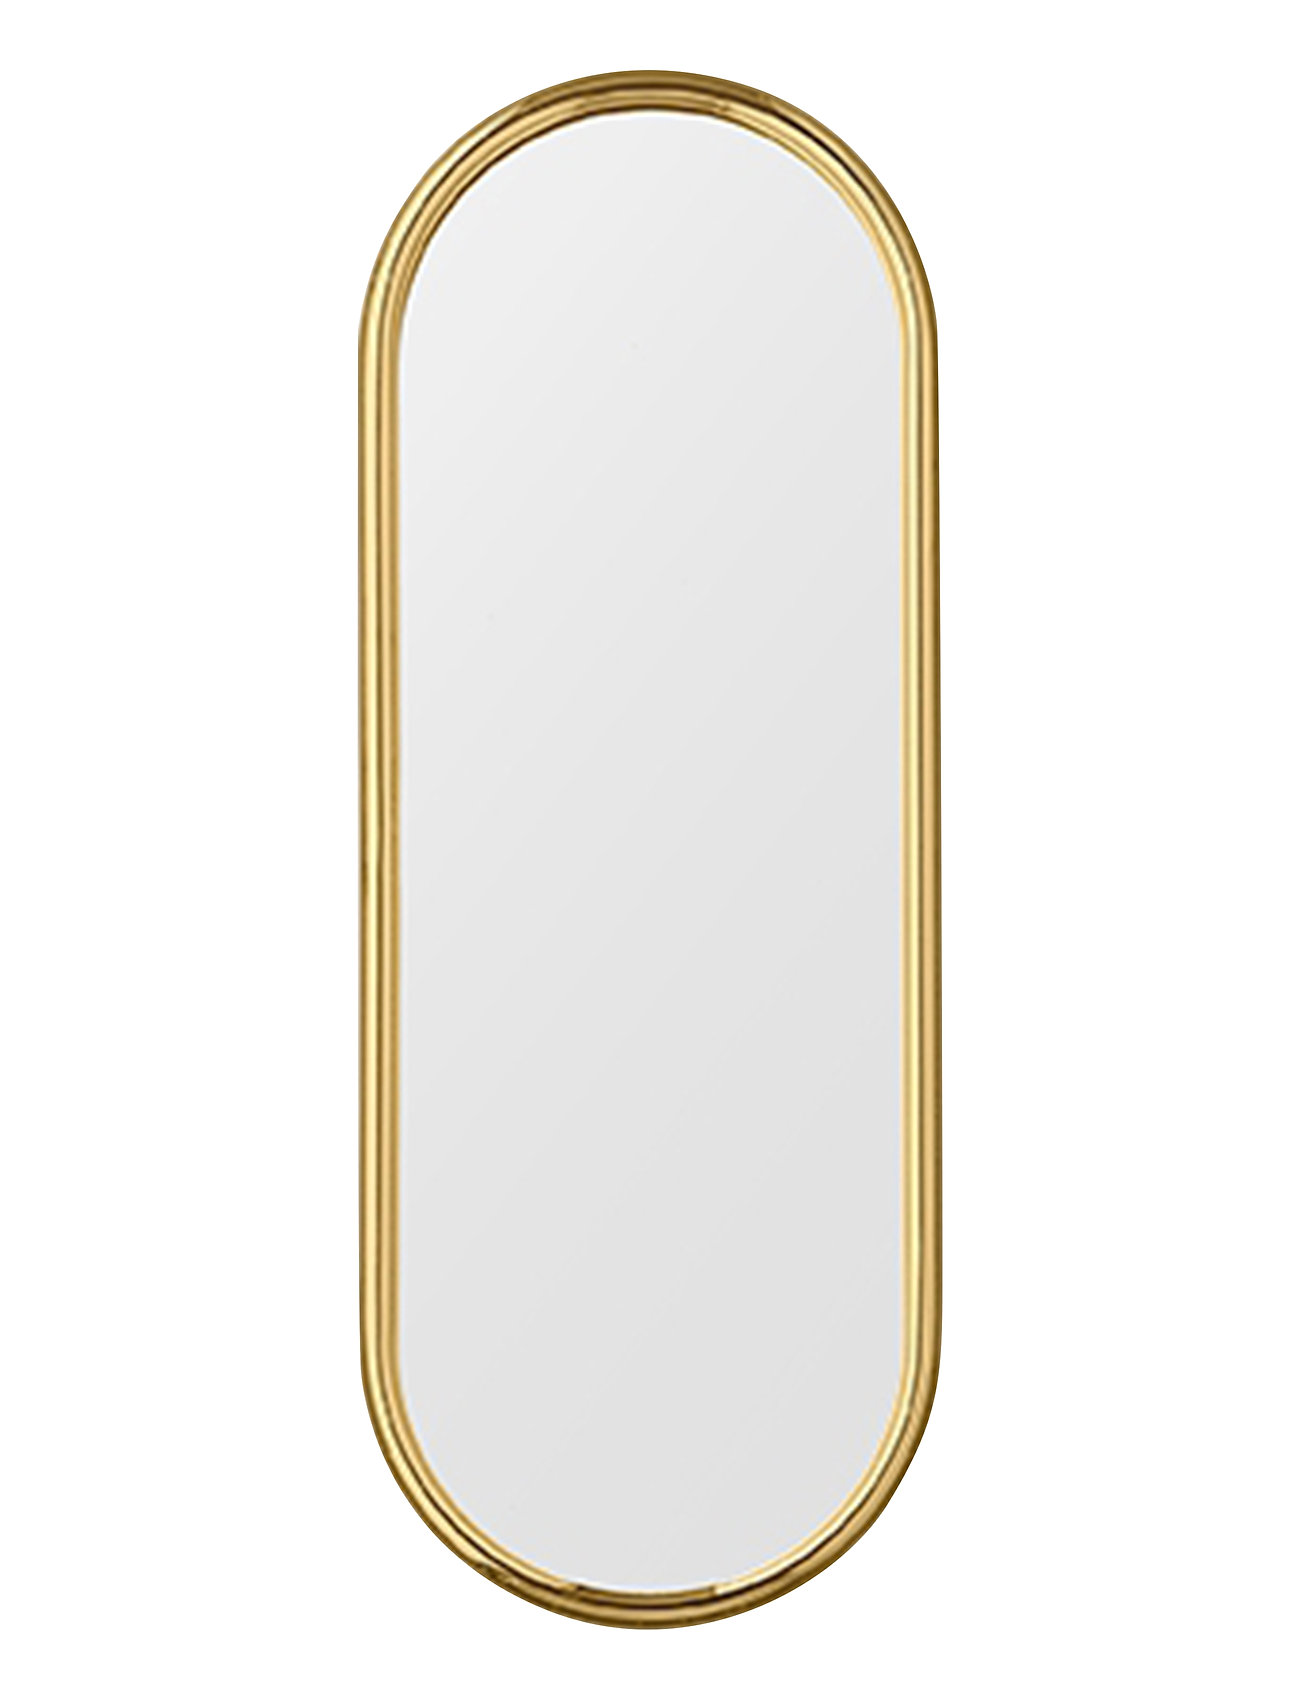 Angui Spejl Home Furniture Mirrors Wall Mirrors Gold AYTM